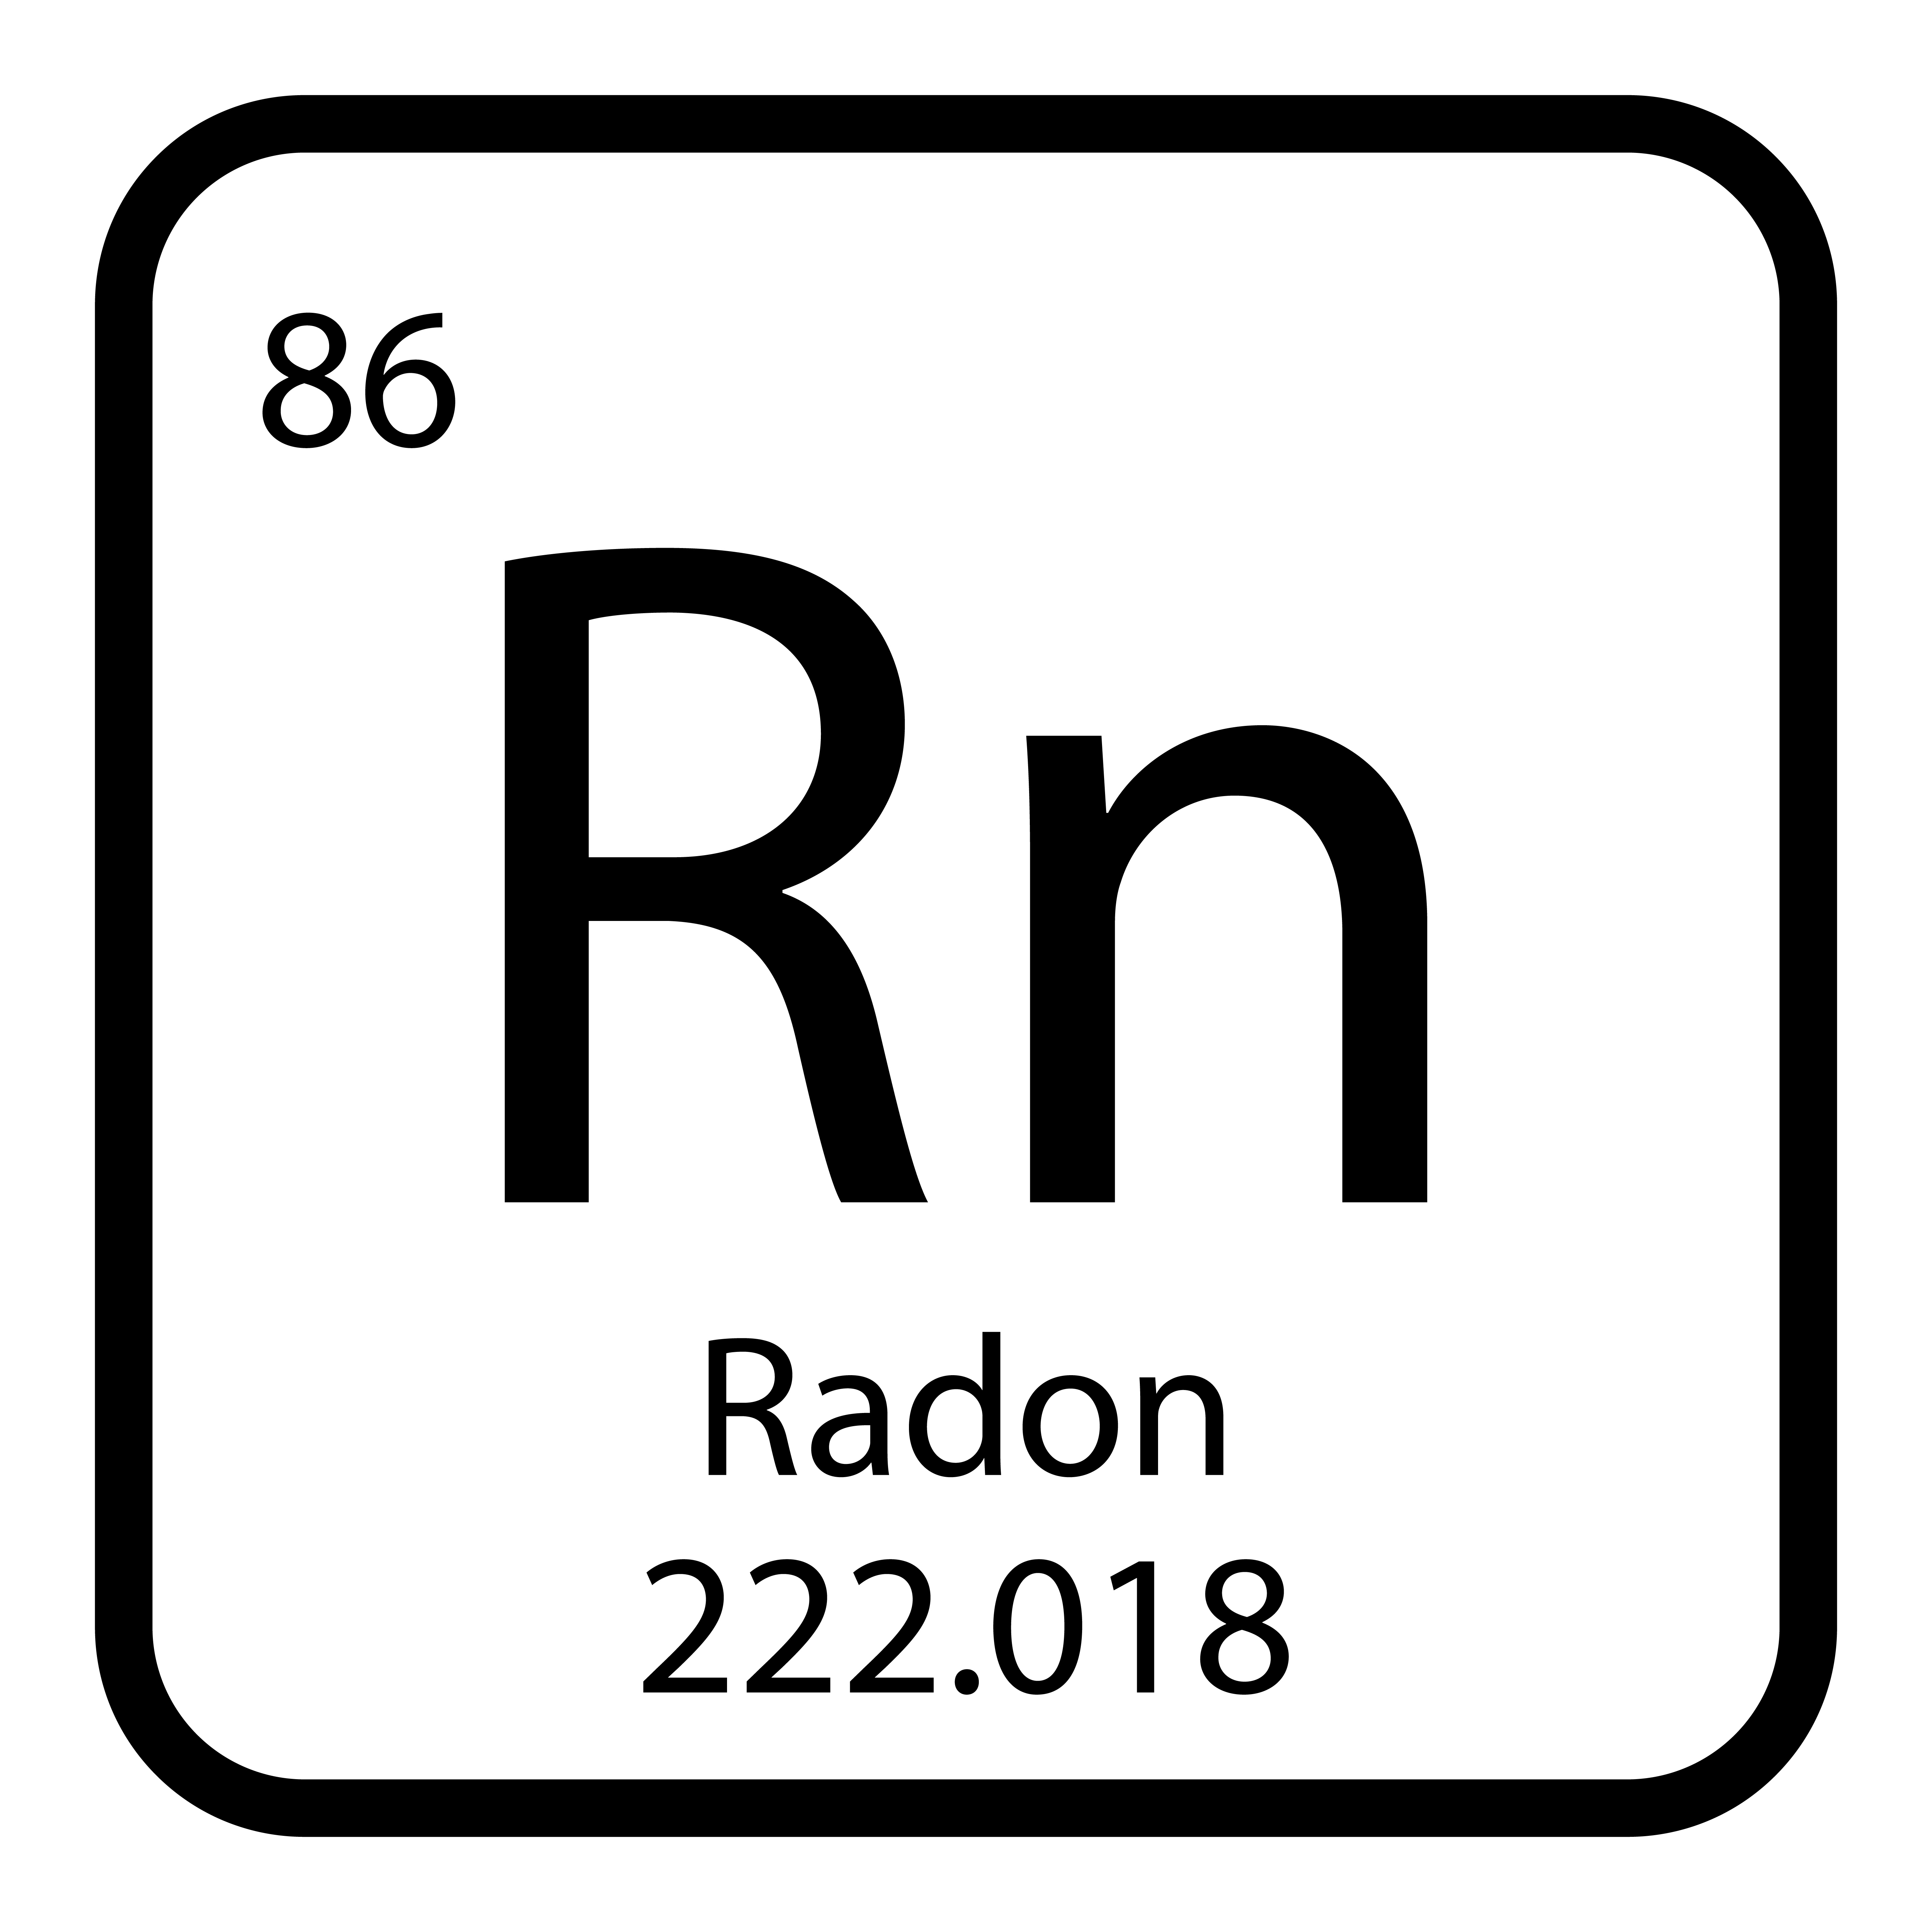 Radon spouwmuurisolatie probleem